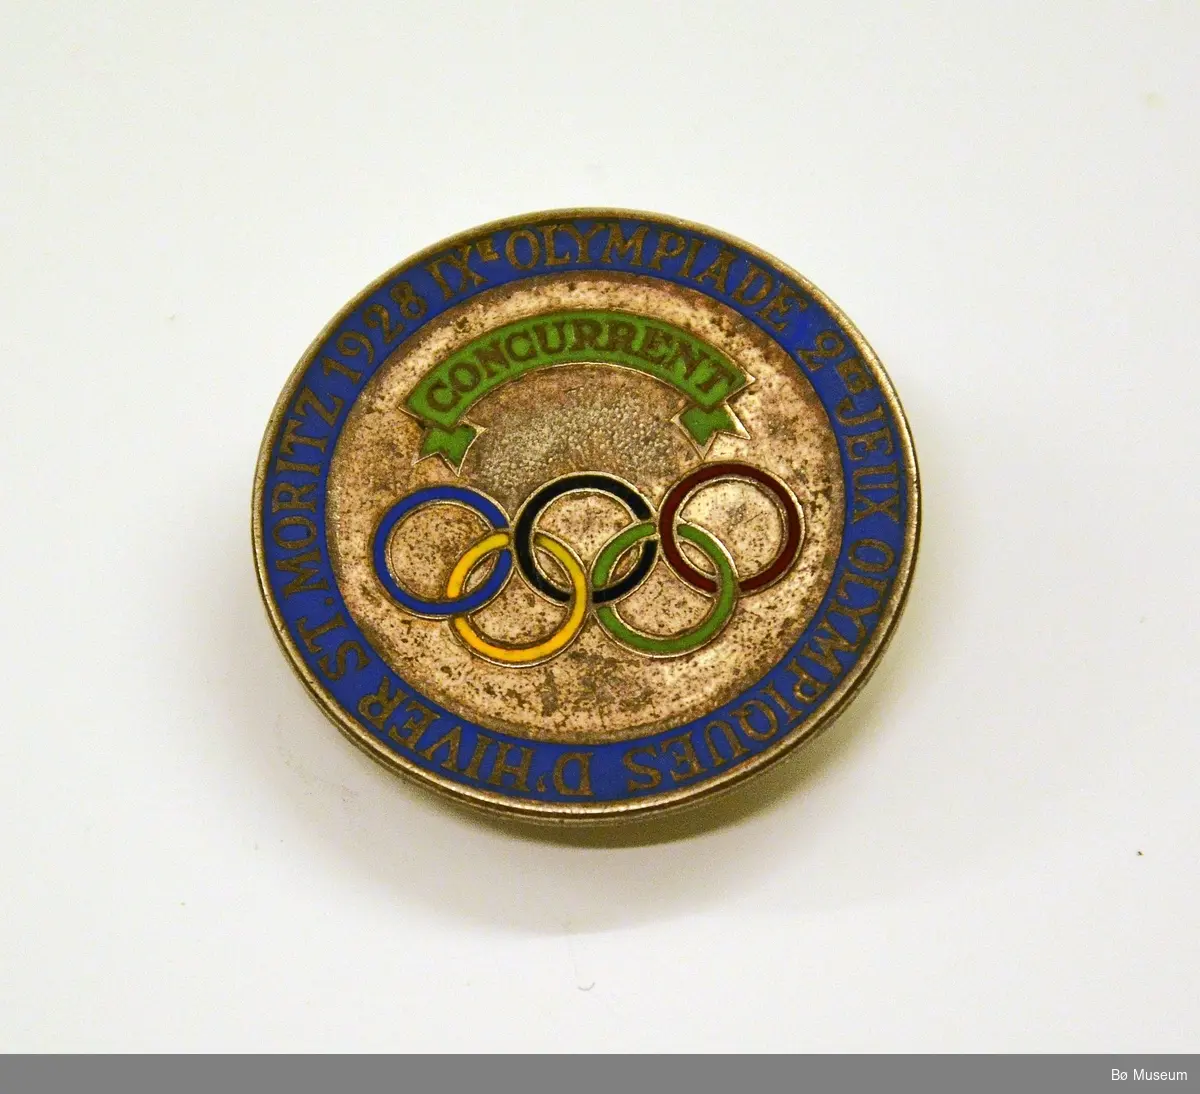 Deltakermedalje (pin)
Innskrift:
IX OLYMPIADE 2 JEUX OLYPIQUES D'HIVER ST. MORITZ 1928.